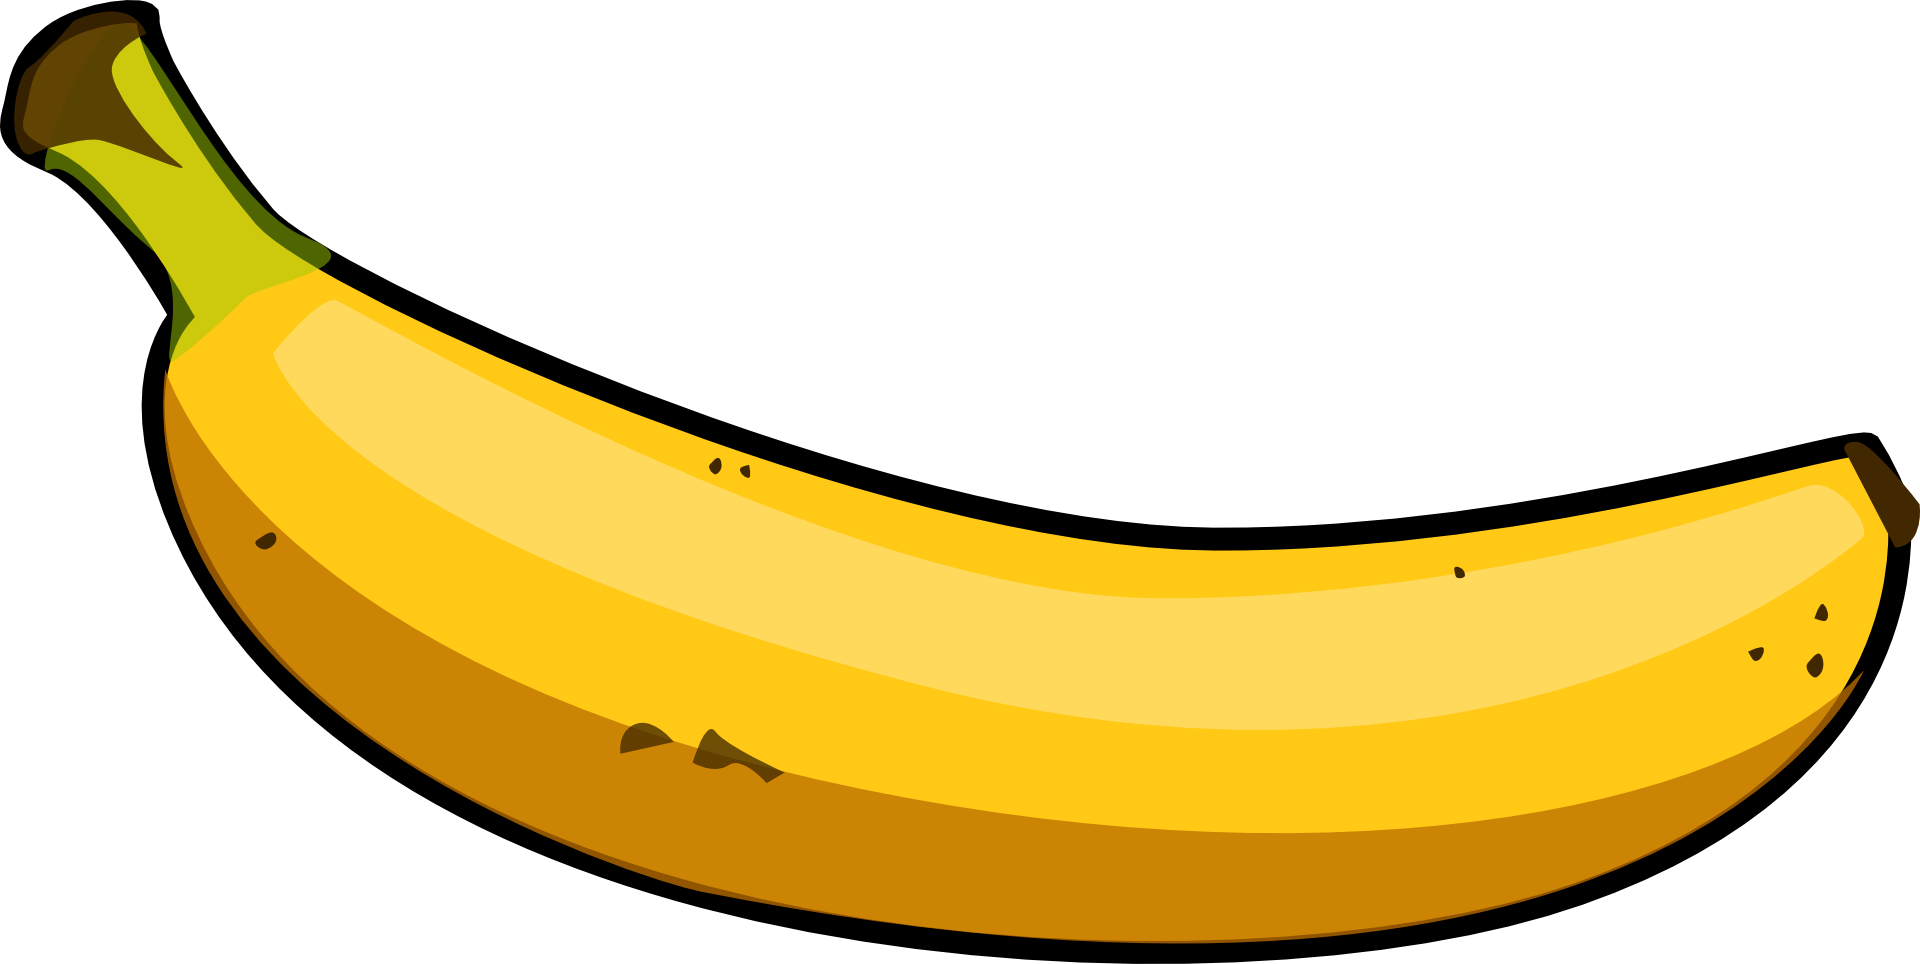 Free Cartoon Banana Png, Download Free Cartoon Banana Png png images, Free  ClipArts on Clipart Library